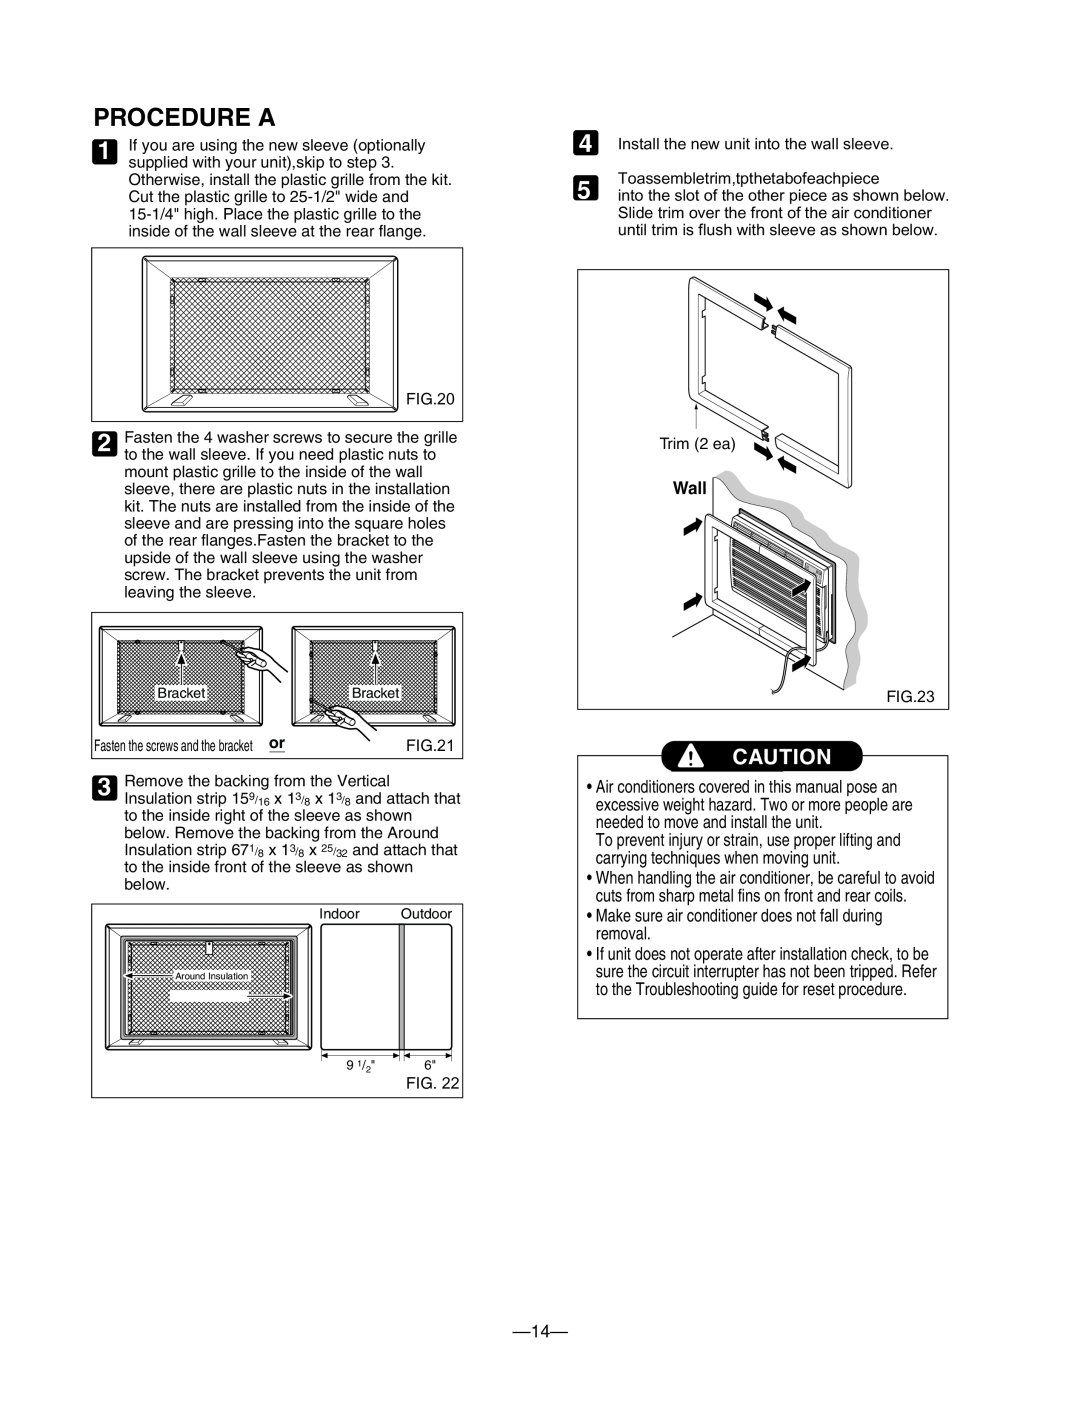 Heat Controller BG-103A service manual Procedure A, Wall 